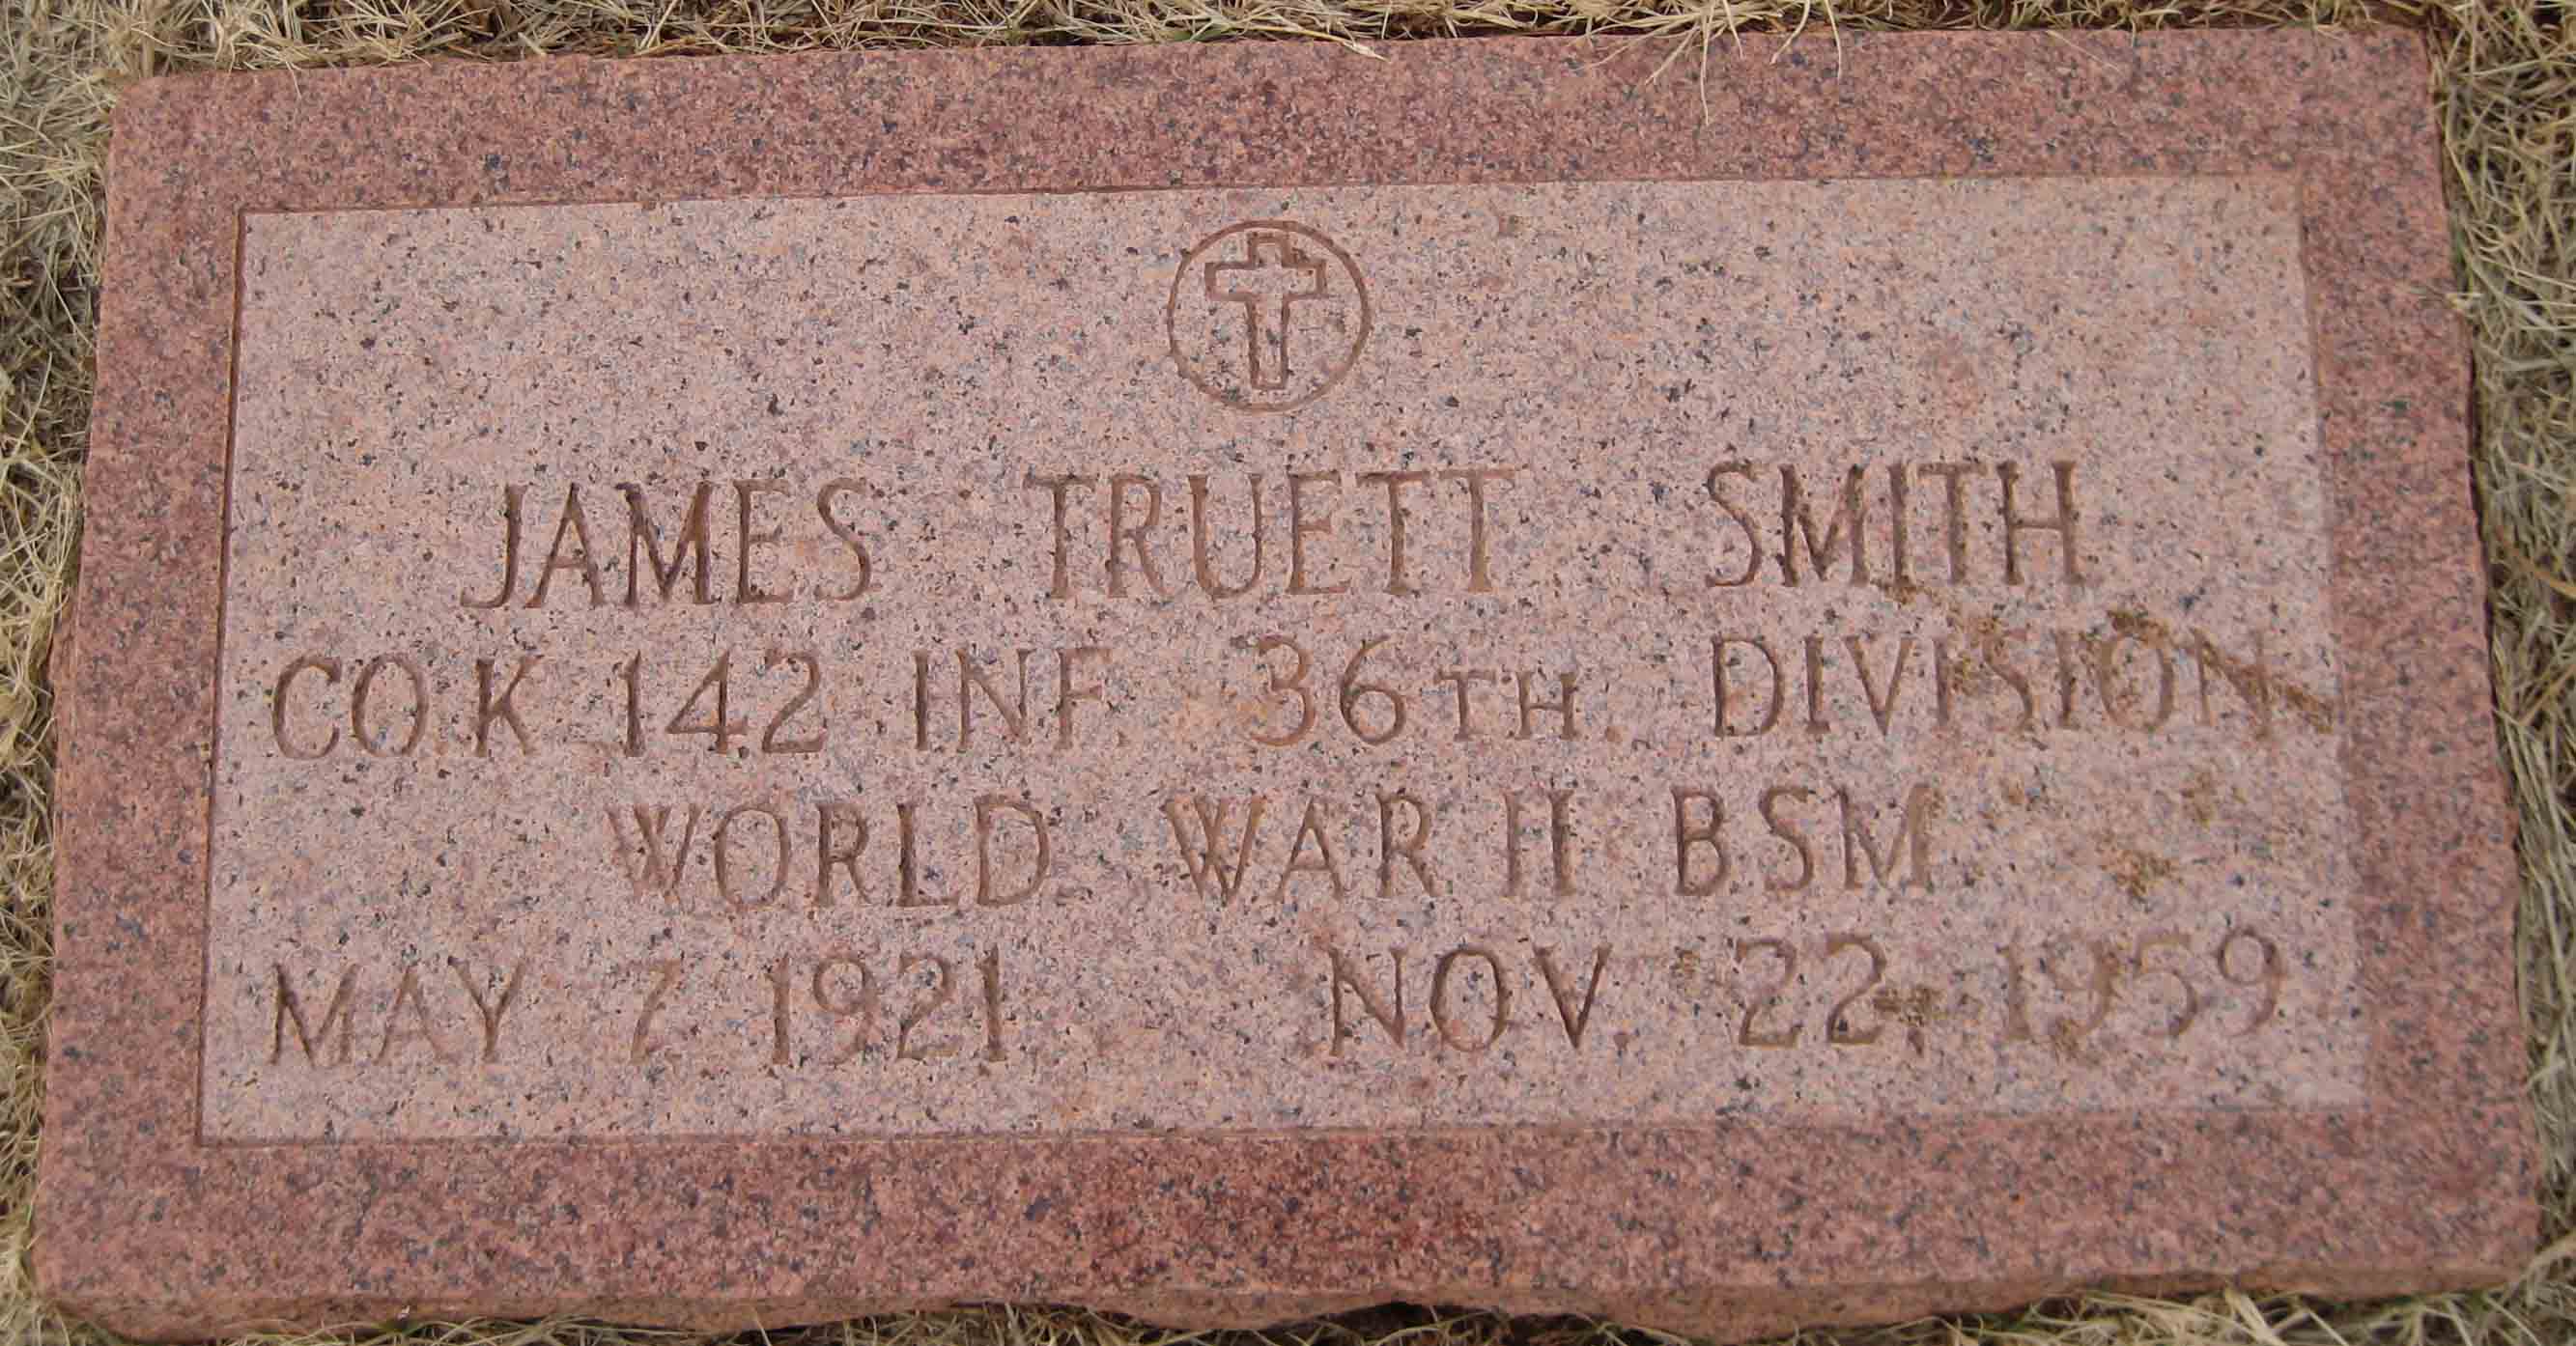 Investigator James Truett Smith | United States Department of the Treasury - Internal Revenue Service - Alcohol and Tobacco Tax Division, U.S. Government